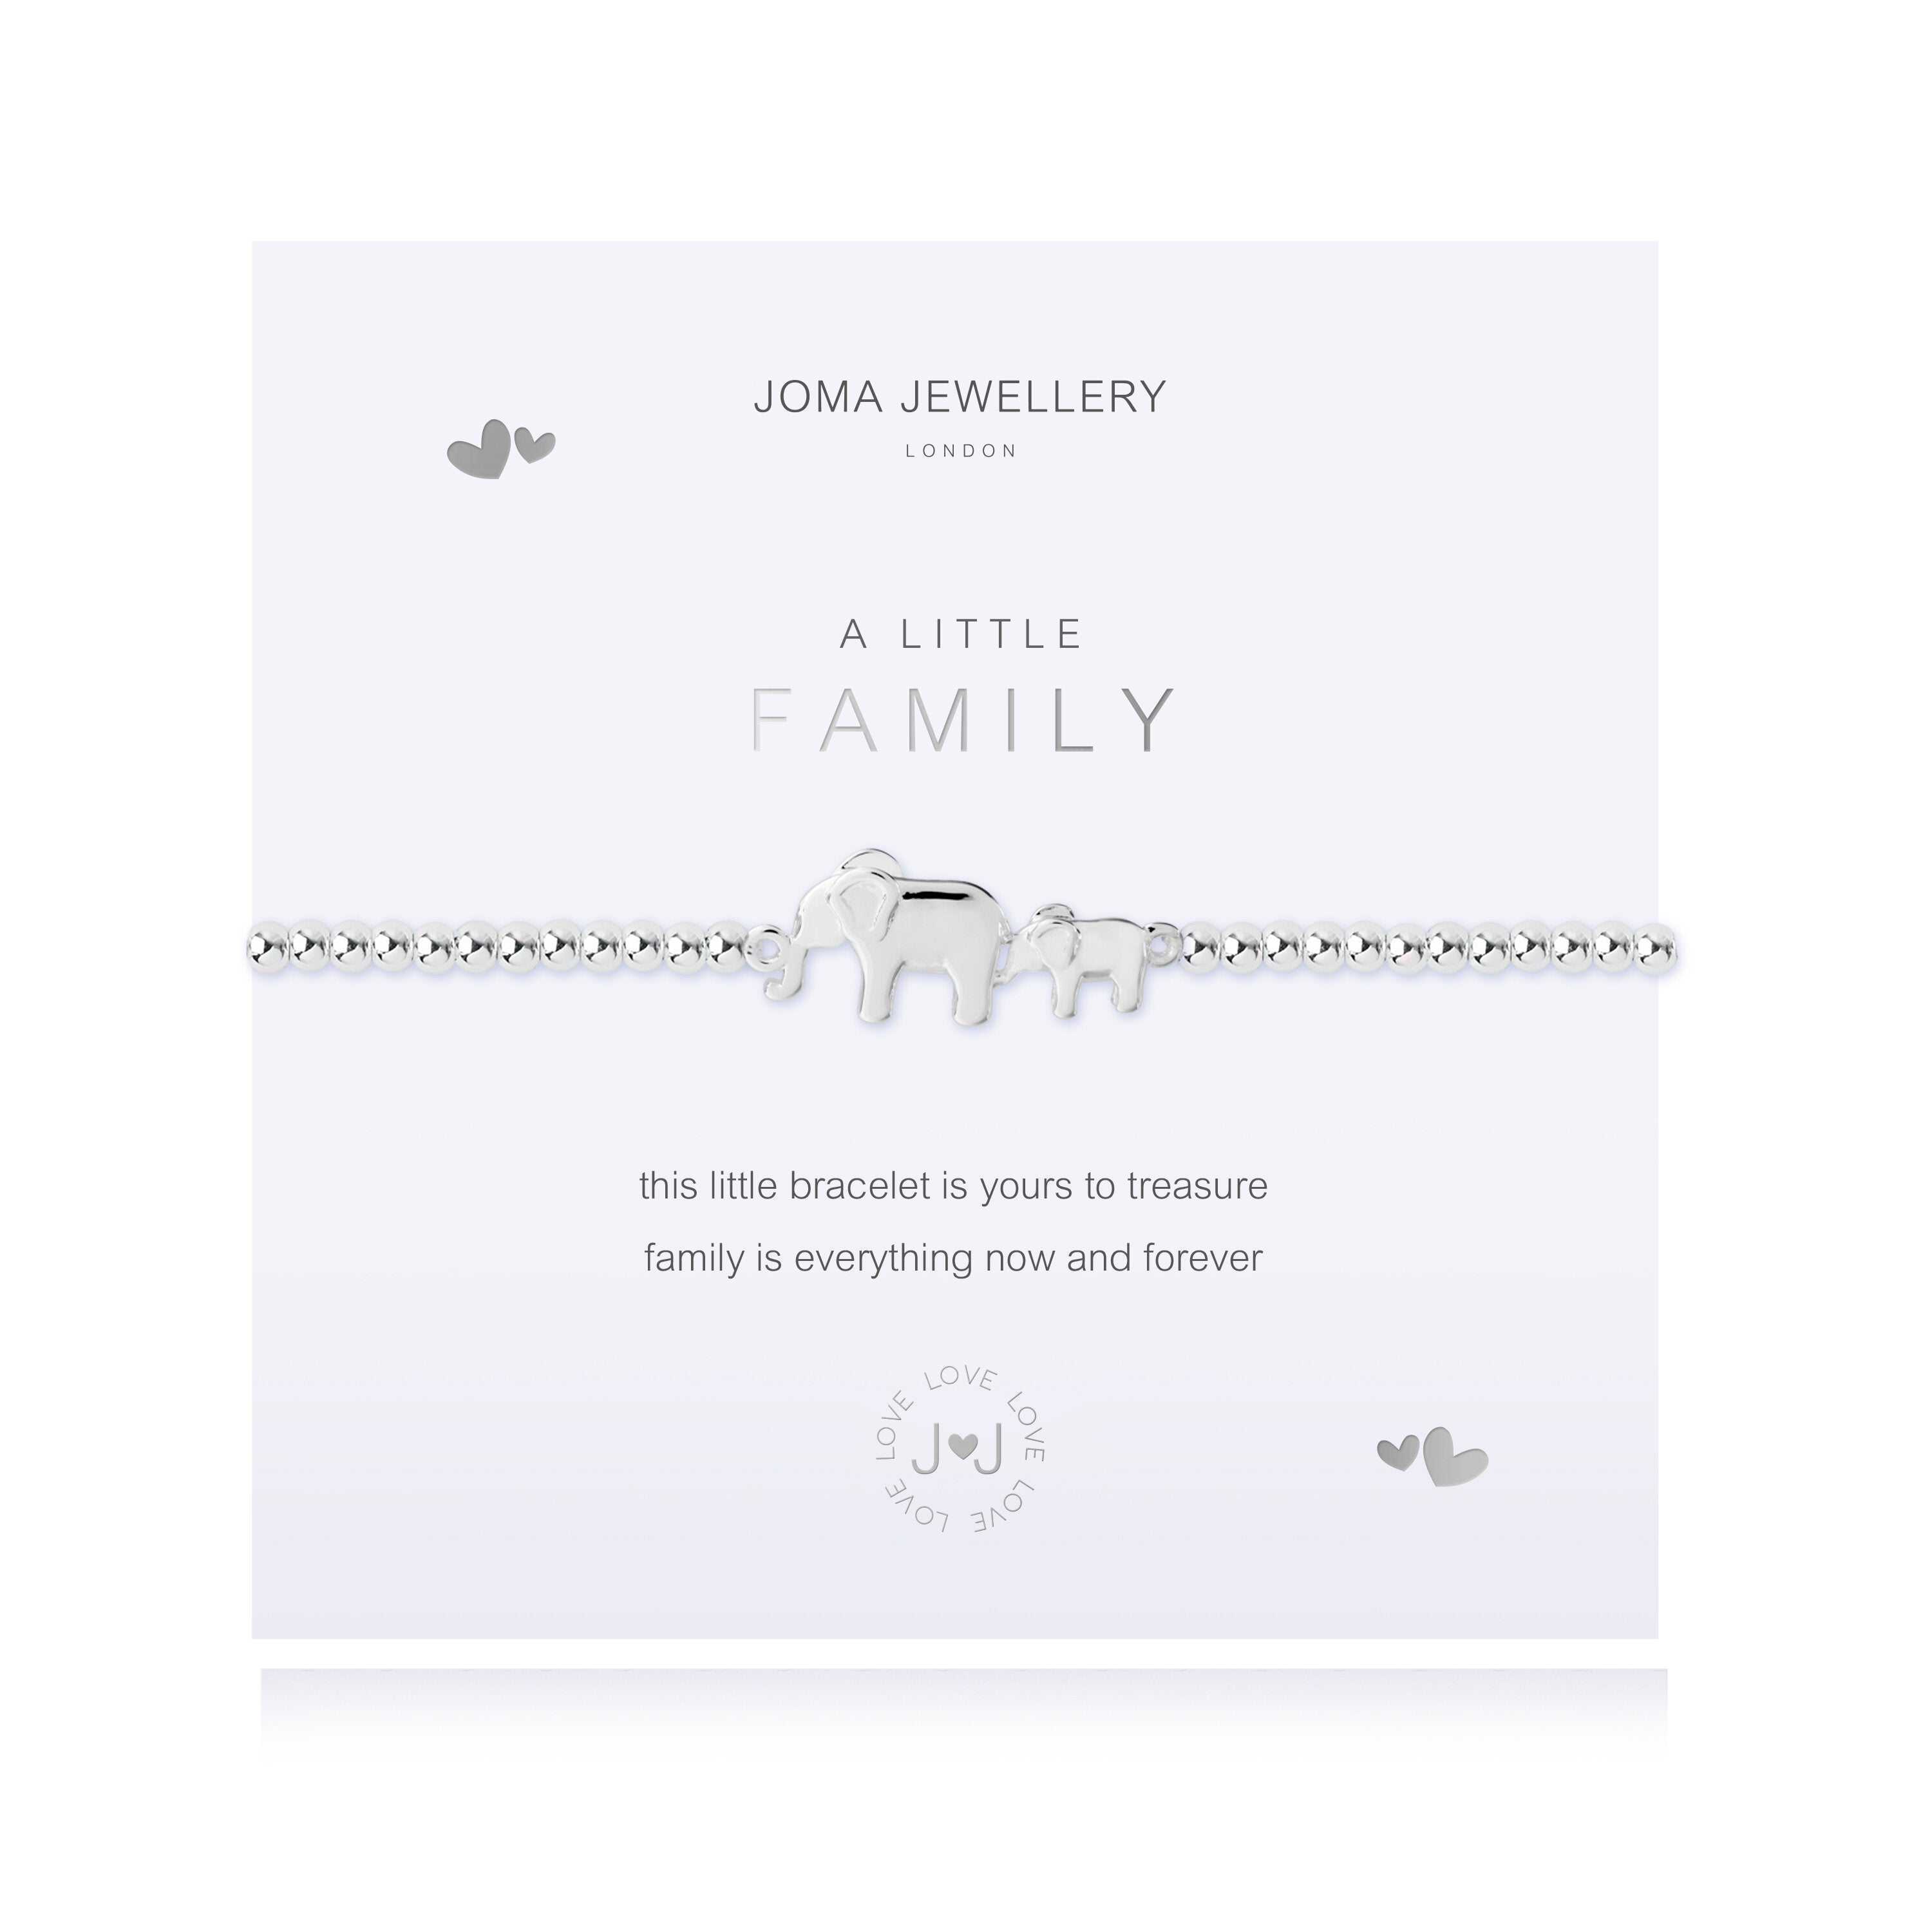 Bracelet by Joma Jewellery - A little family